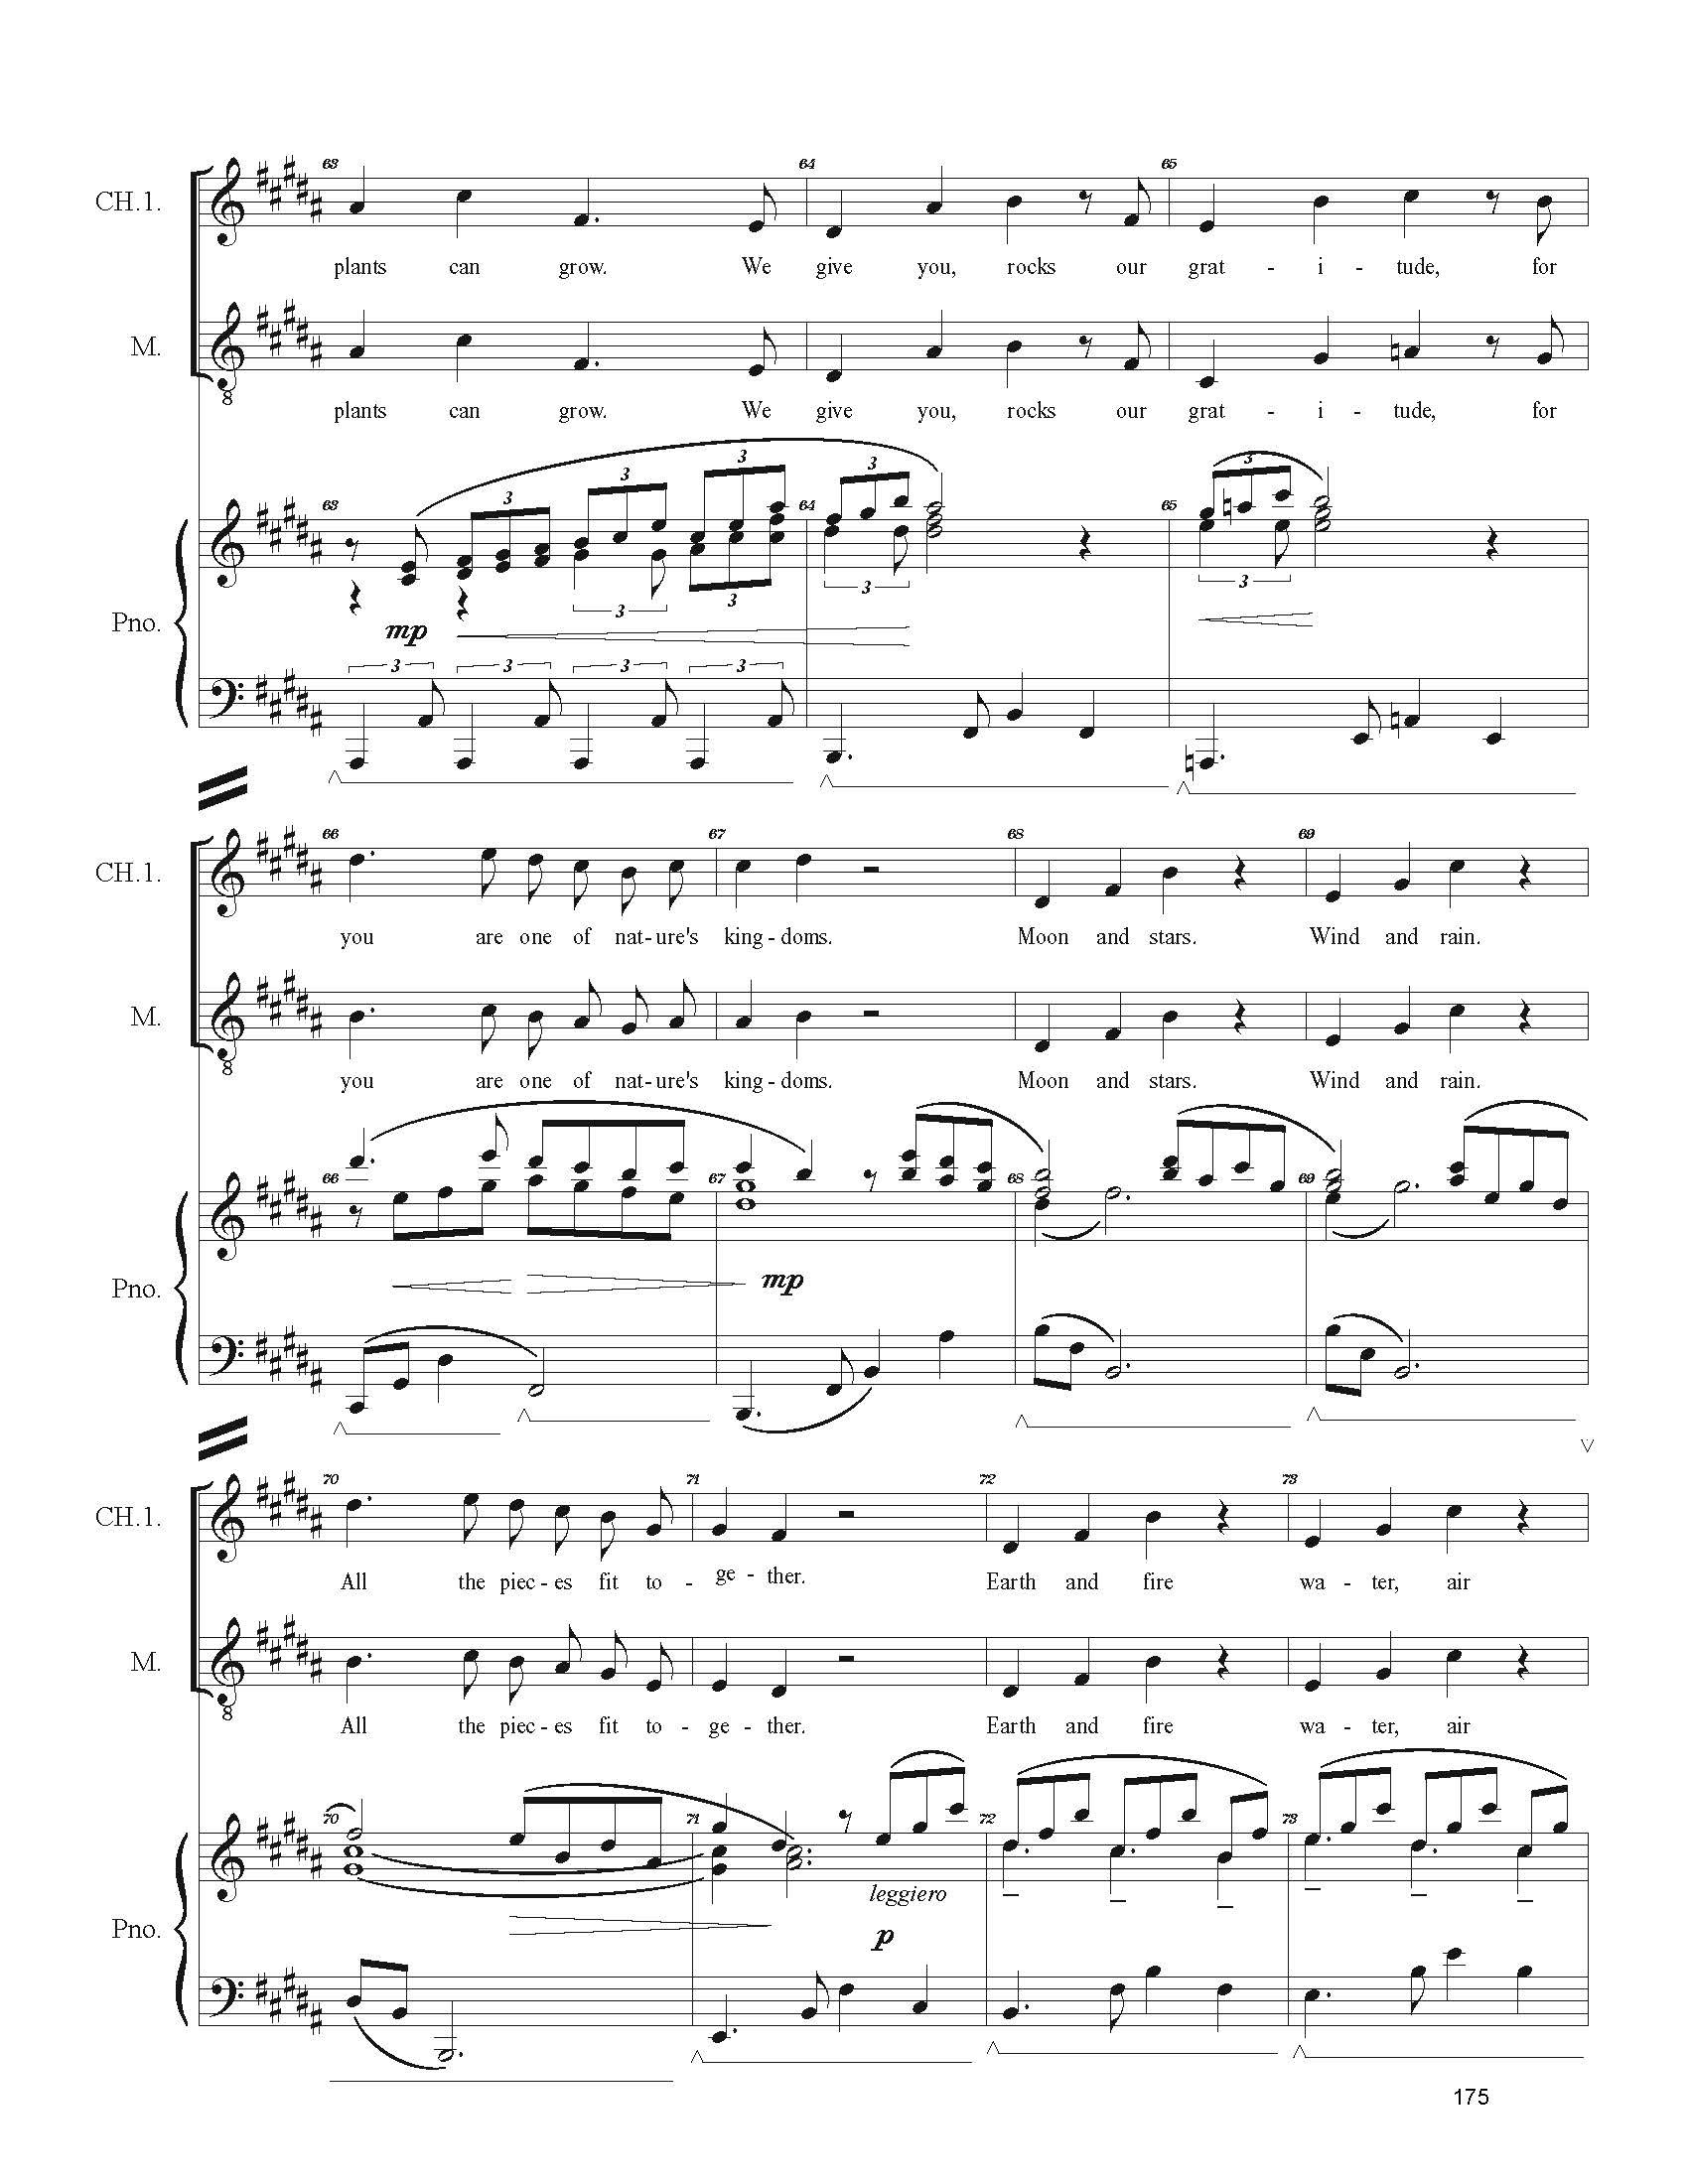 FULL PIANO VOCAL SCORE DRAFT 1 - Score_Page_175.jpg